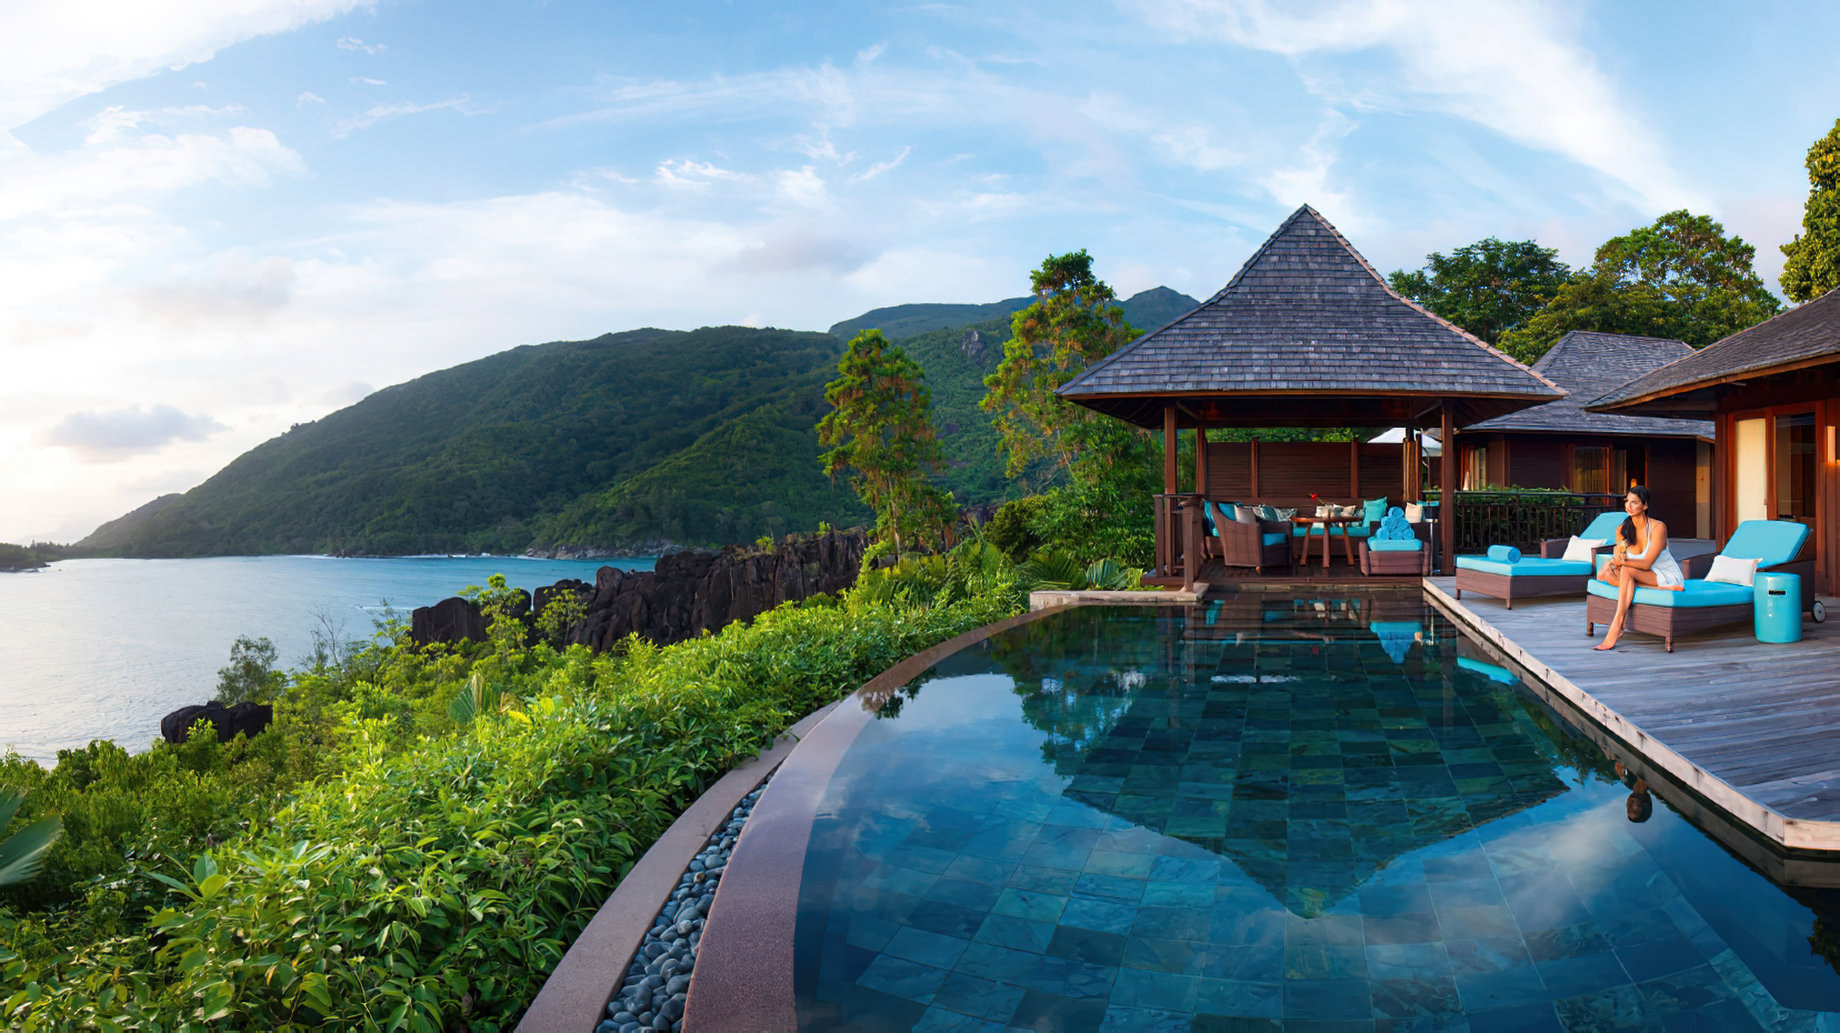 Constance Ephelia Resort - Port Launay, Mahe, Seychelles - Presidential Villa Pool Deck View